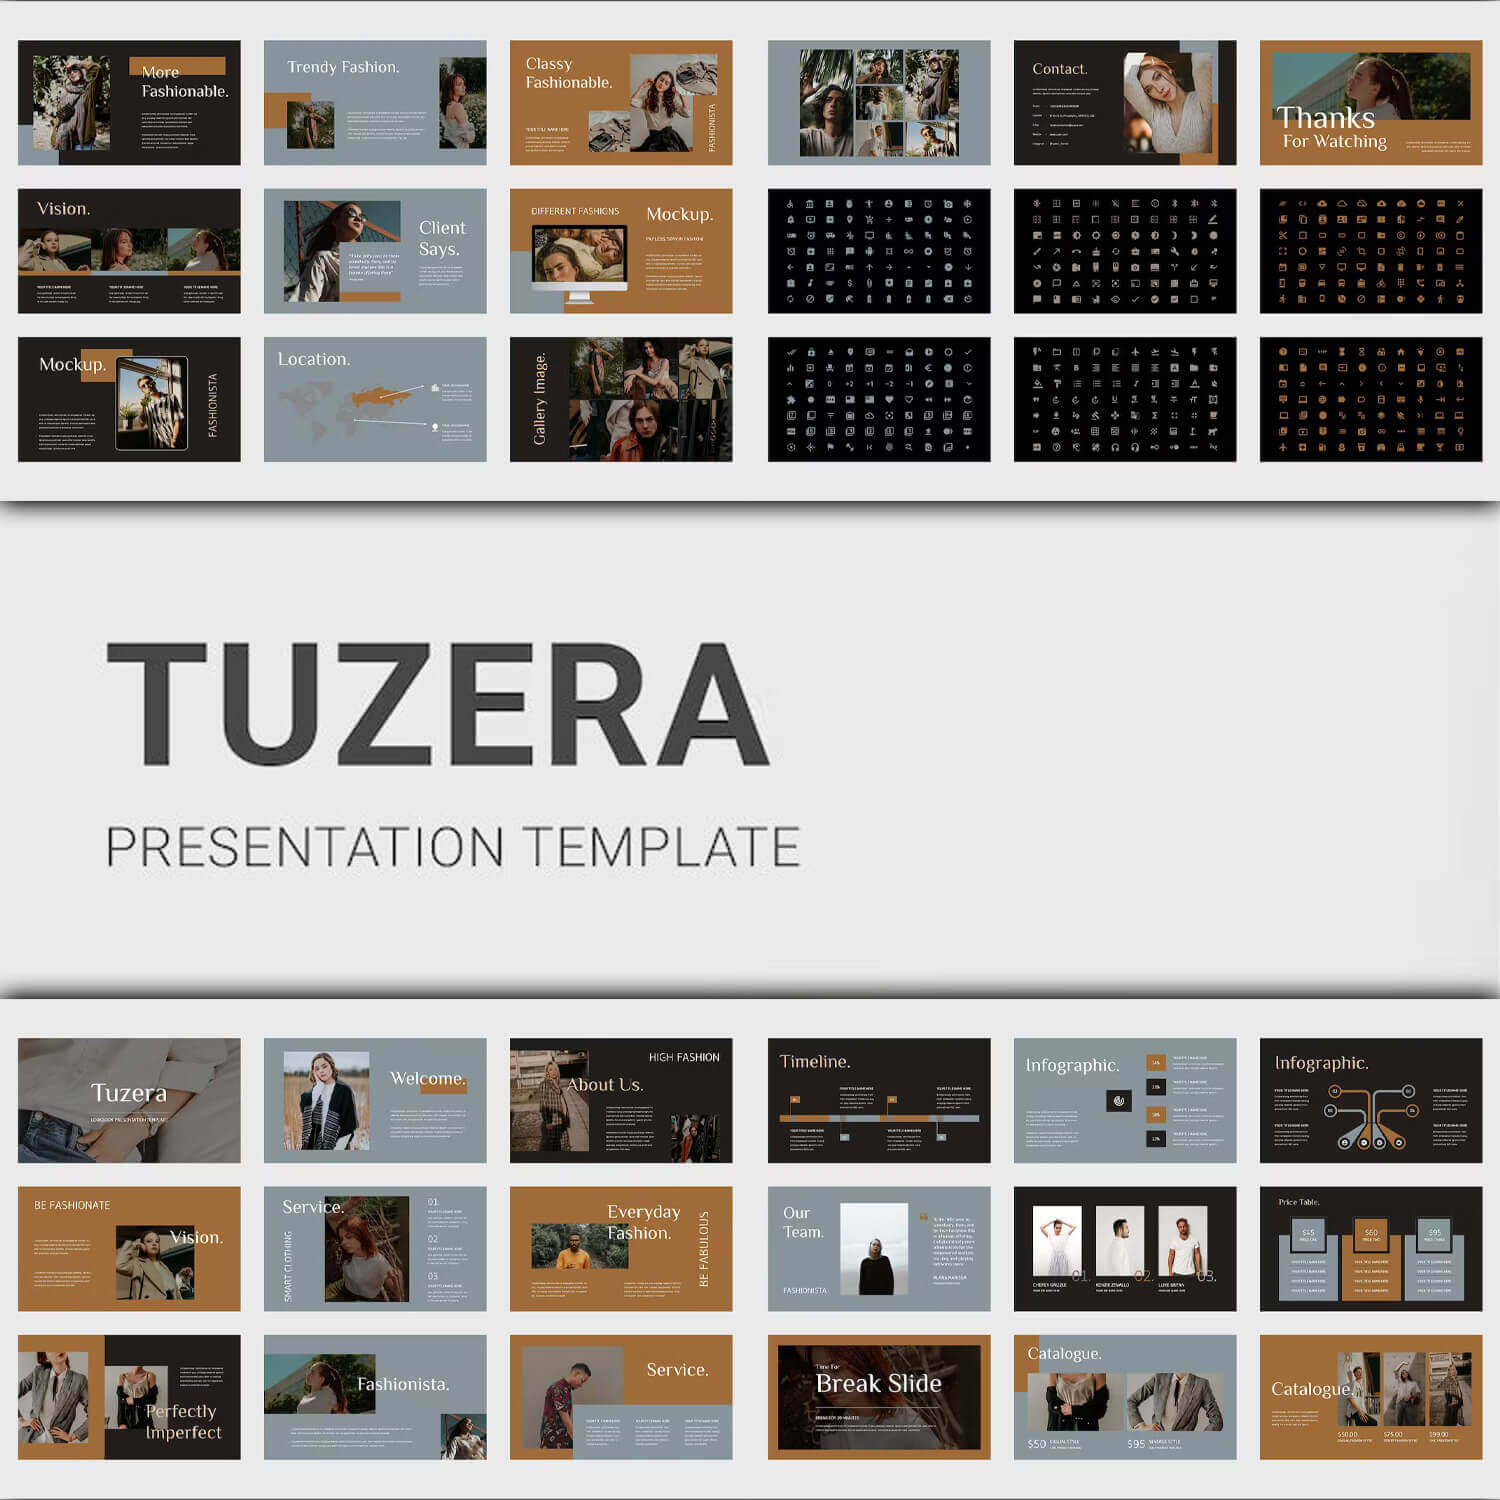 Tuzera lookbook presentation template.